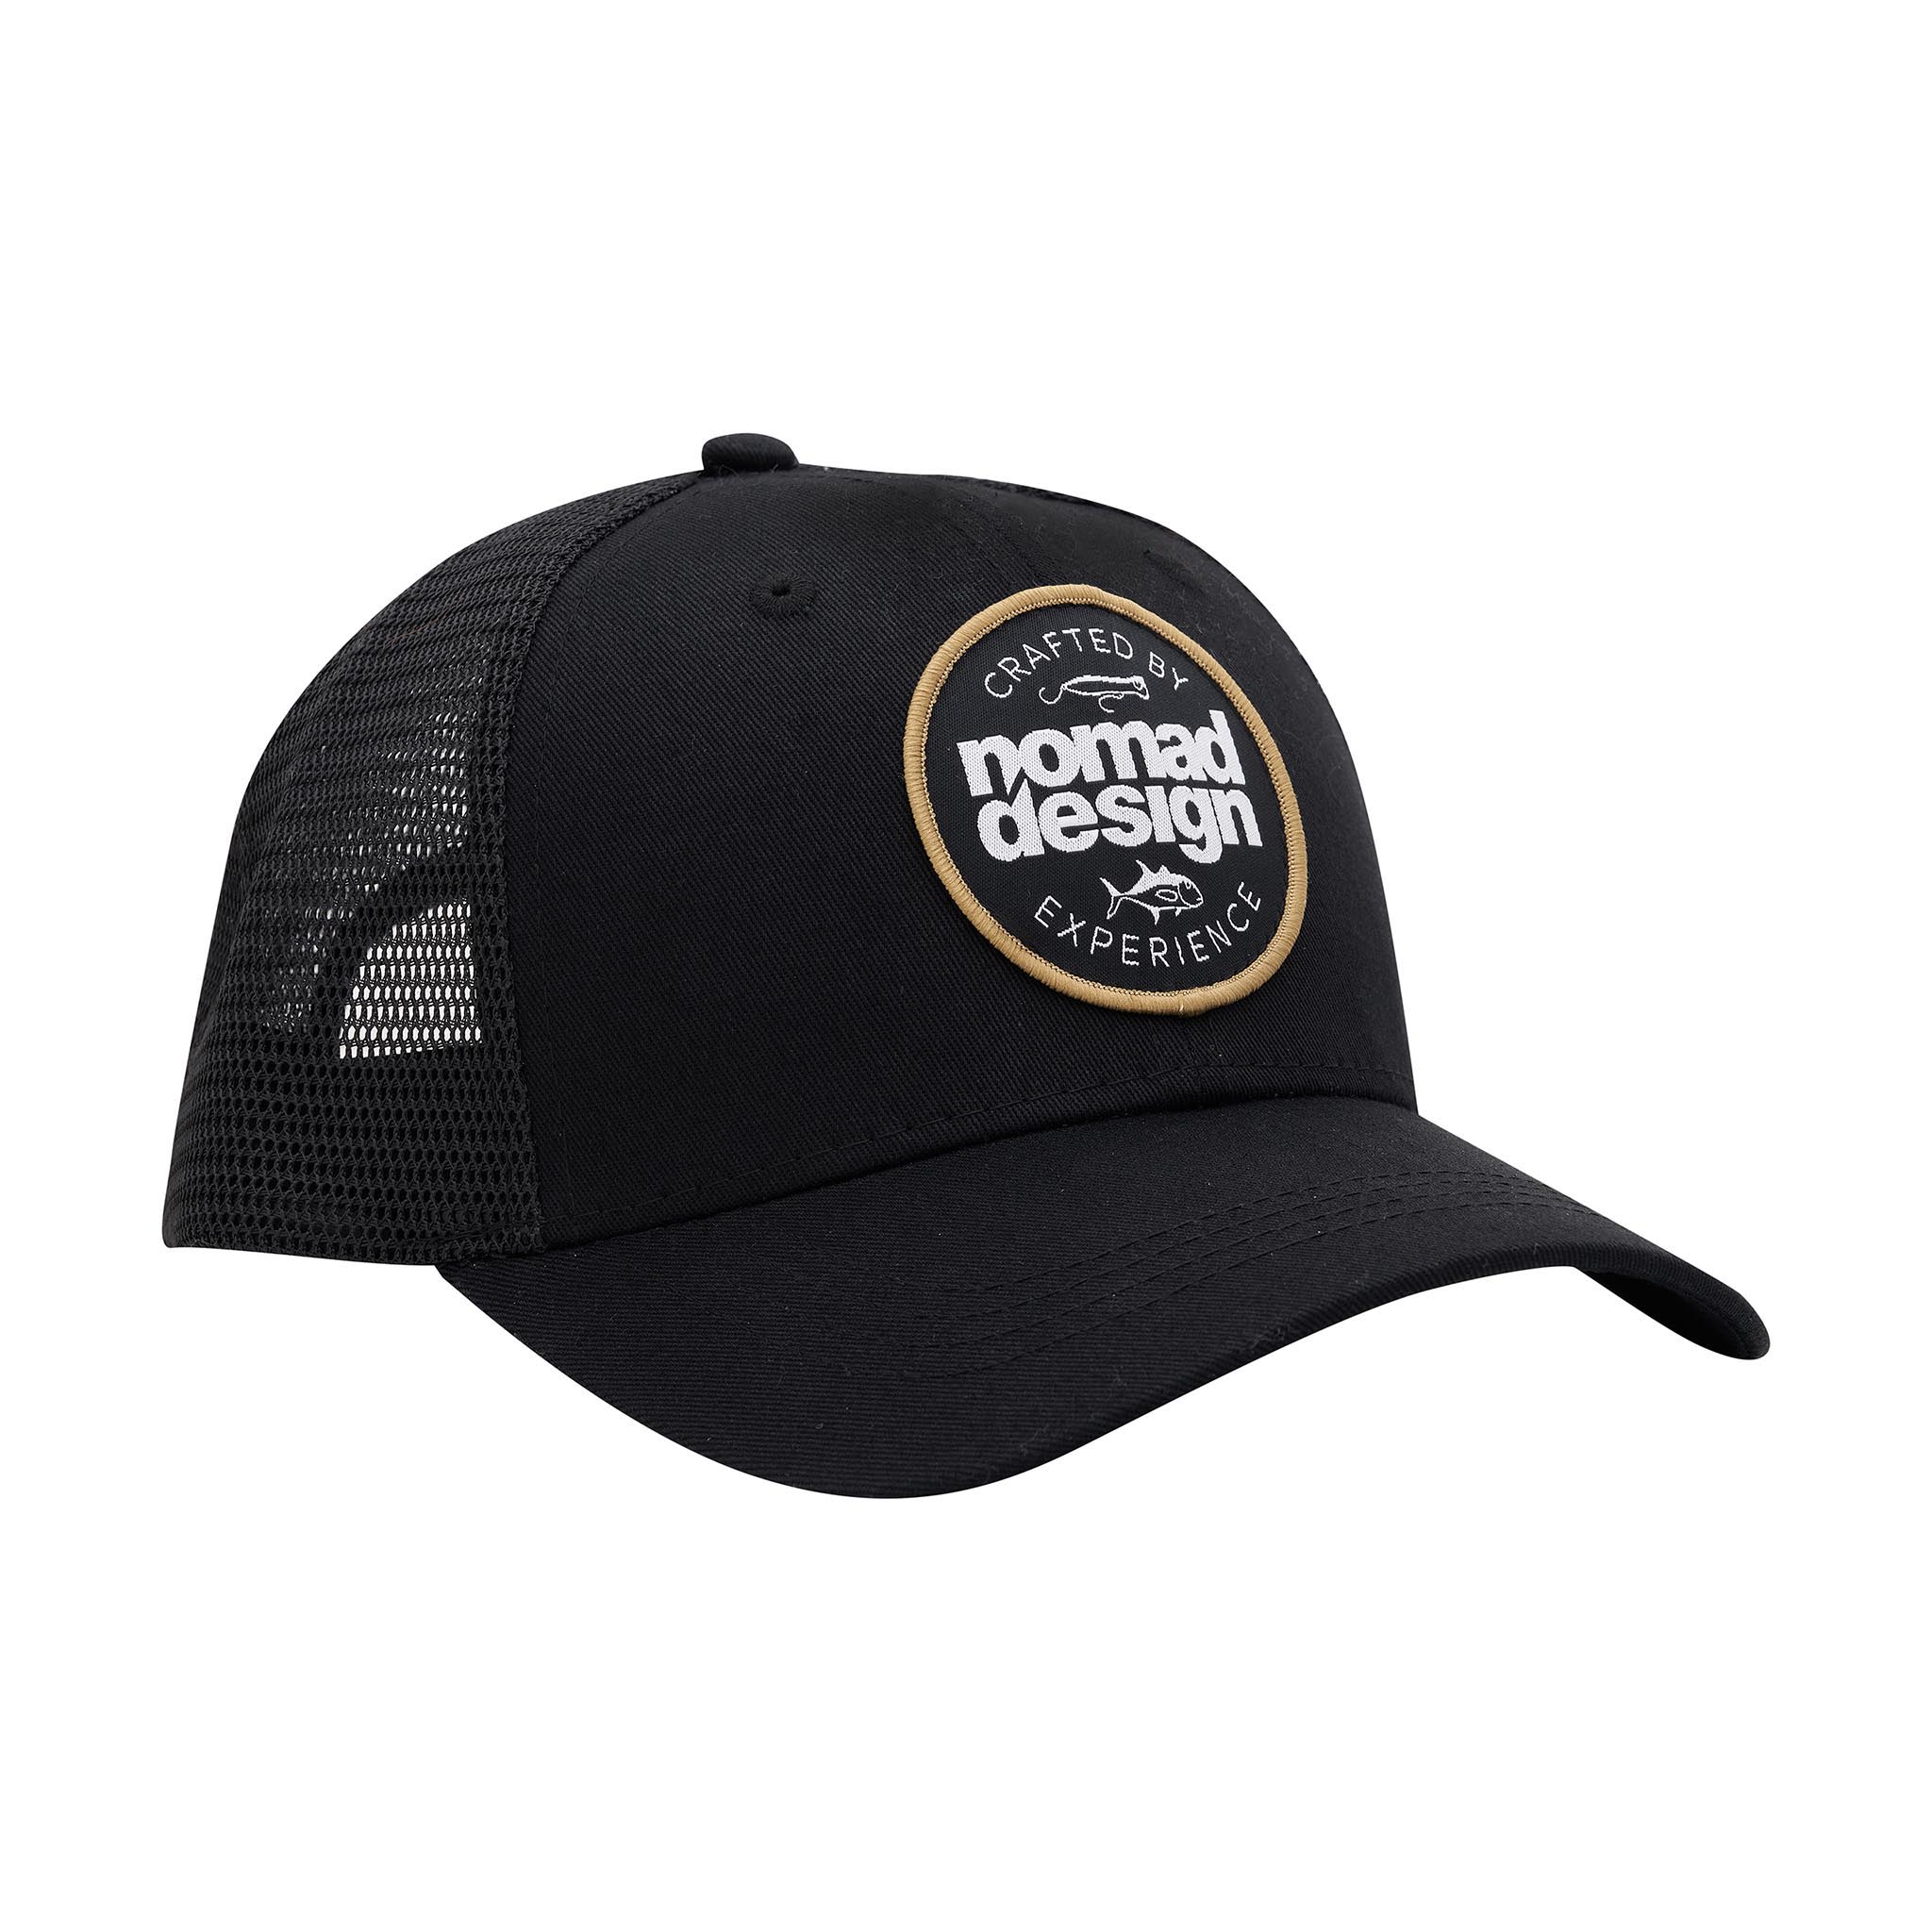 Pelagic Hats Trucker Adjustable Snapback – Marine World